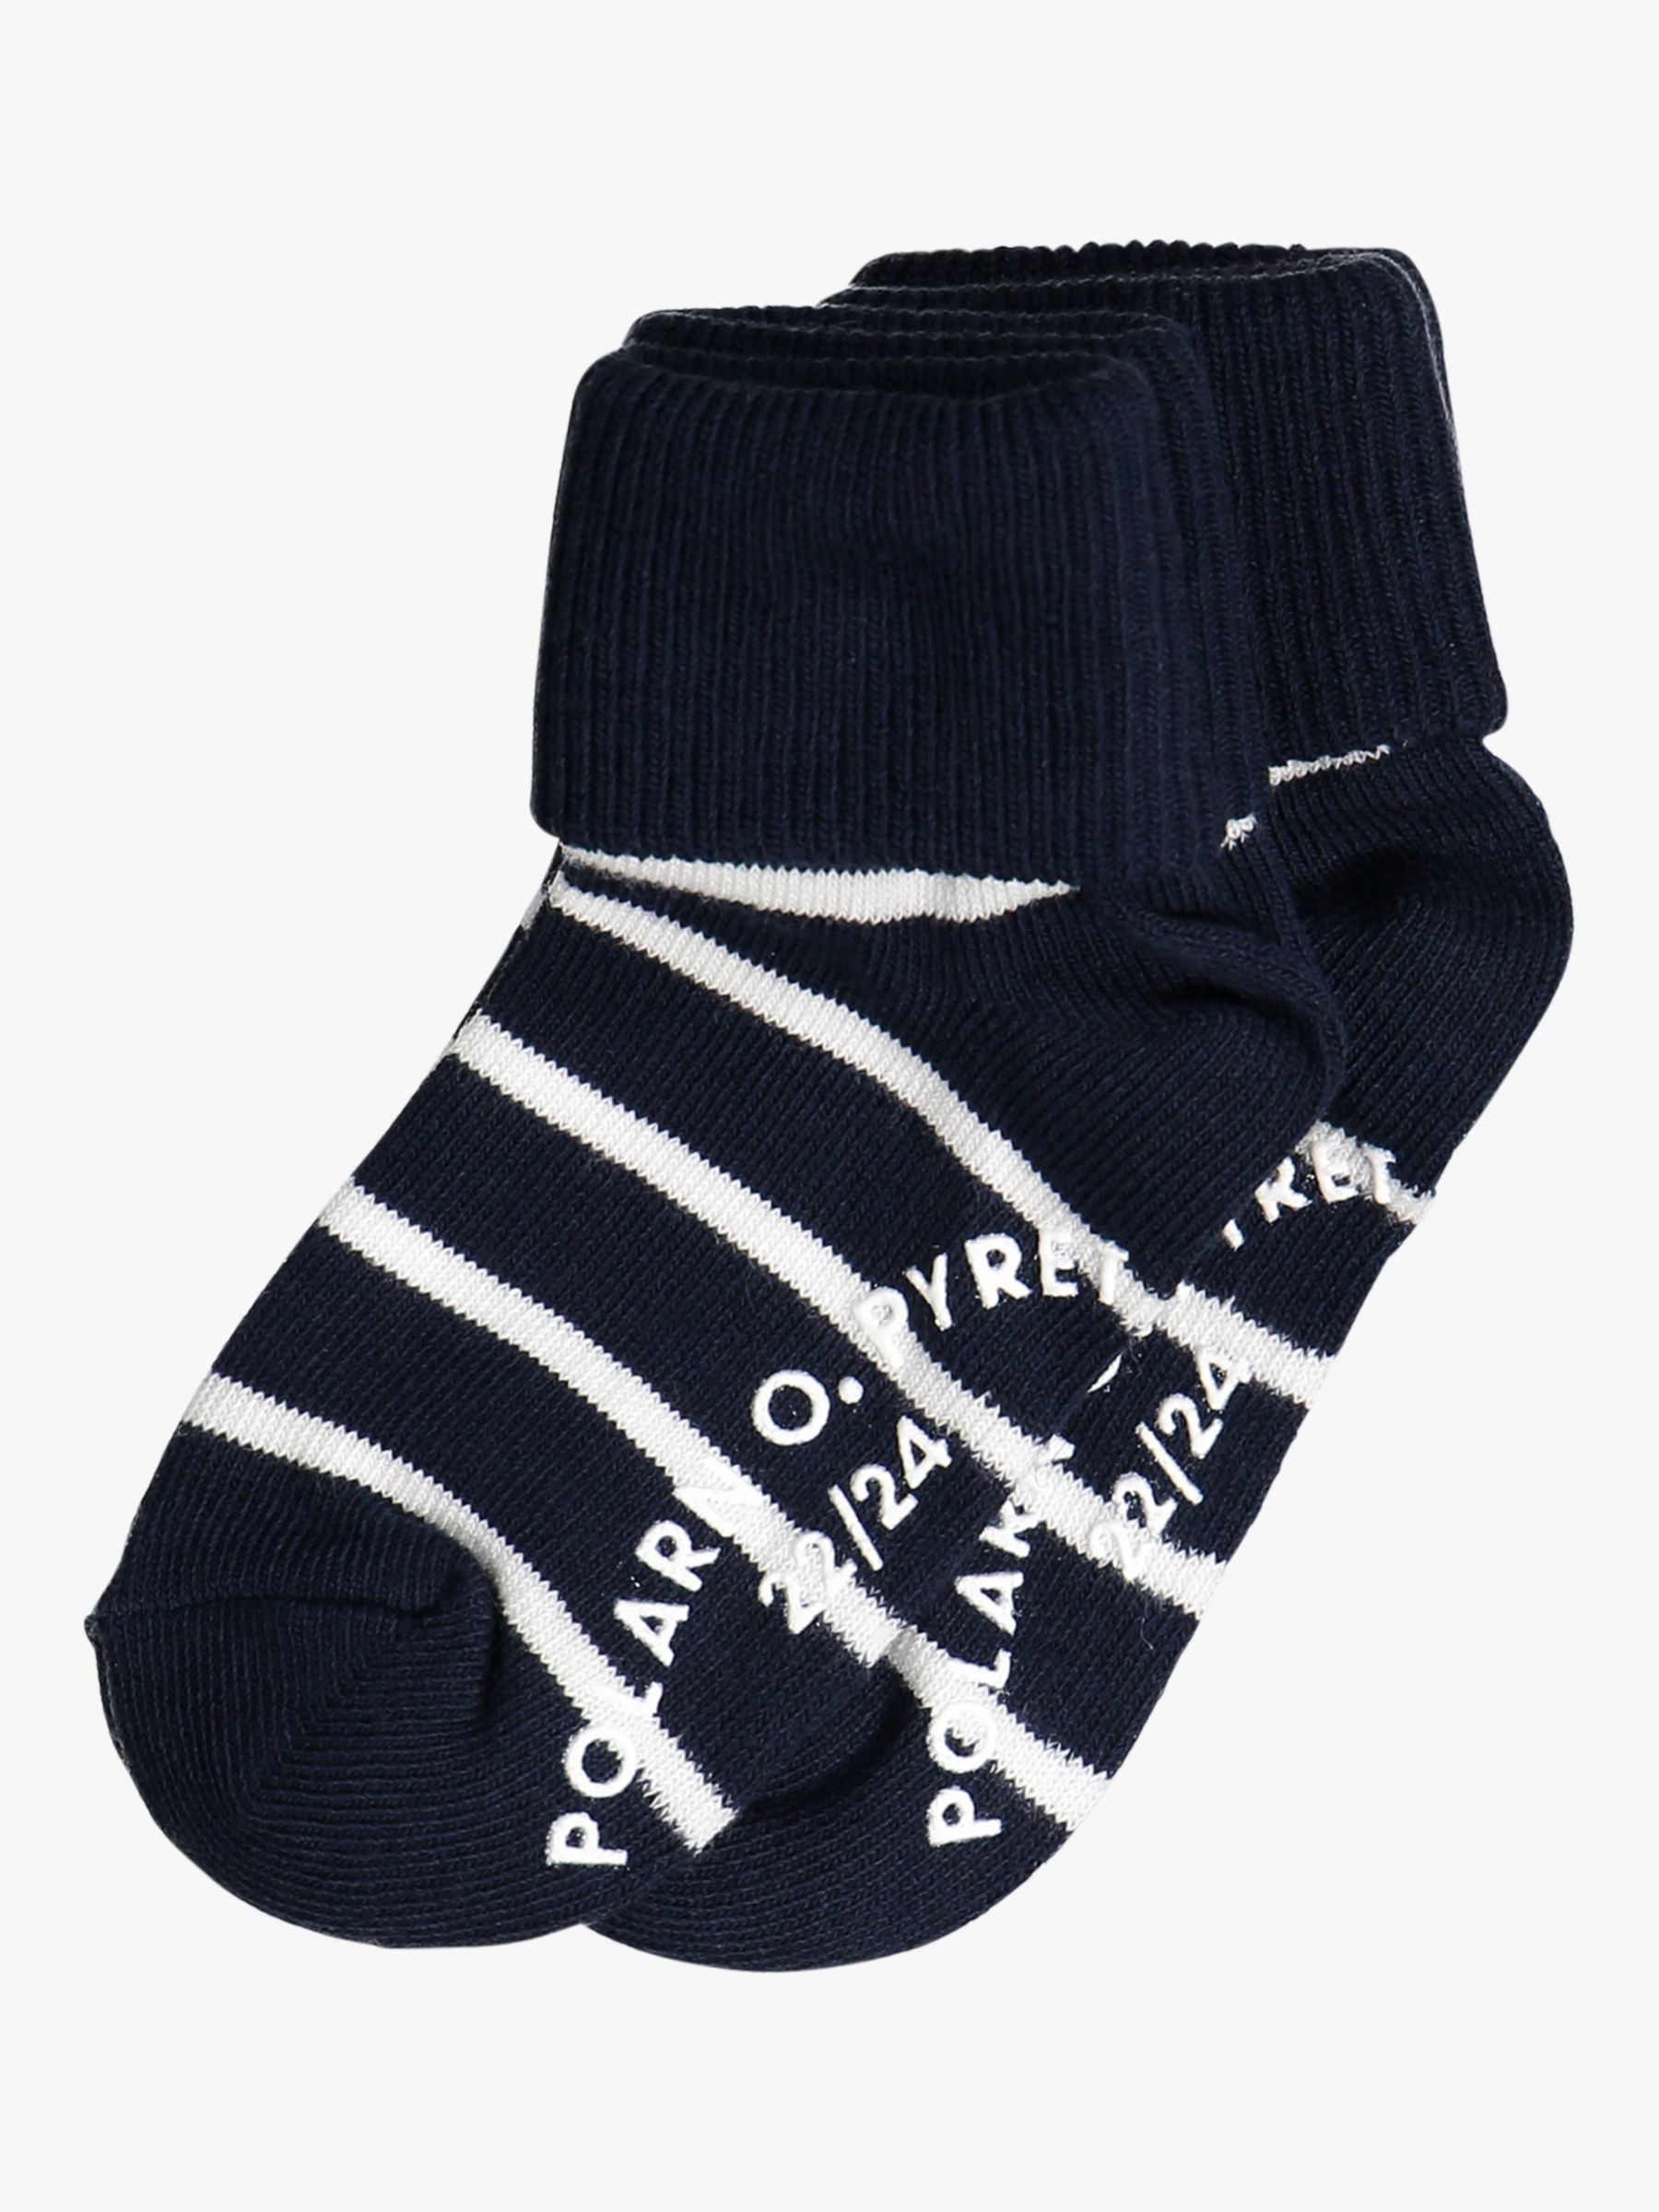 Polarn O. Pyret Baby Anti-Slip Socks, Pack of 2, Dark Blue, 1-2 years